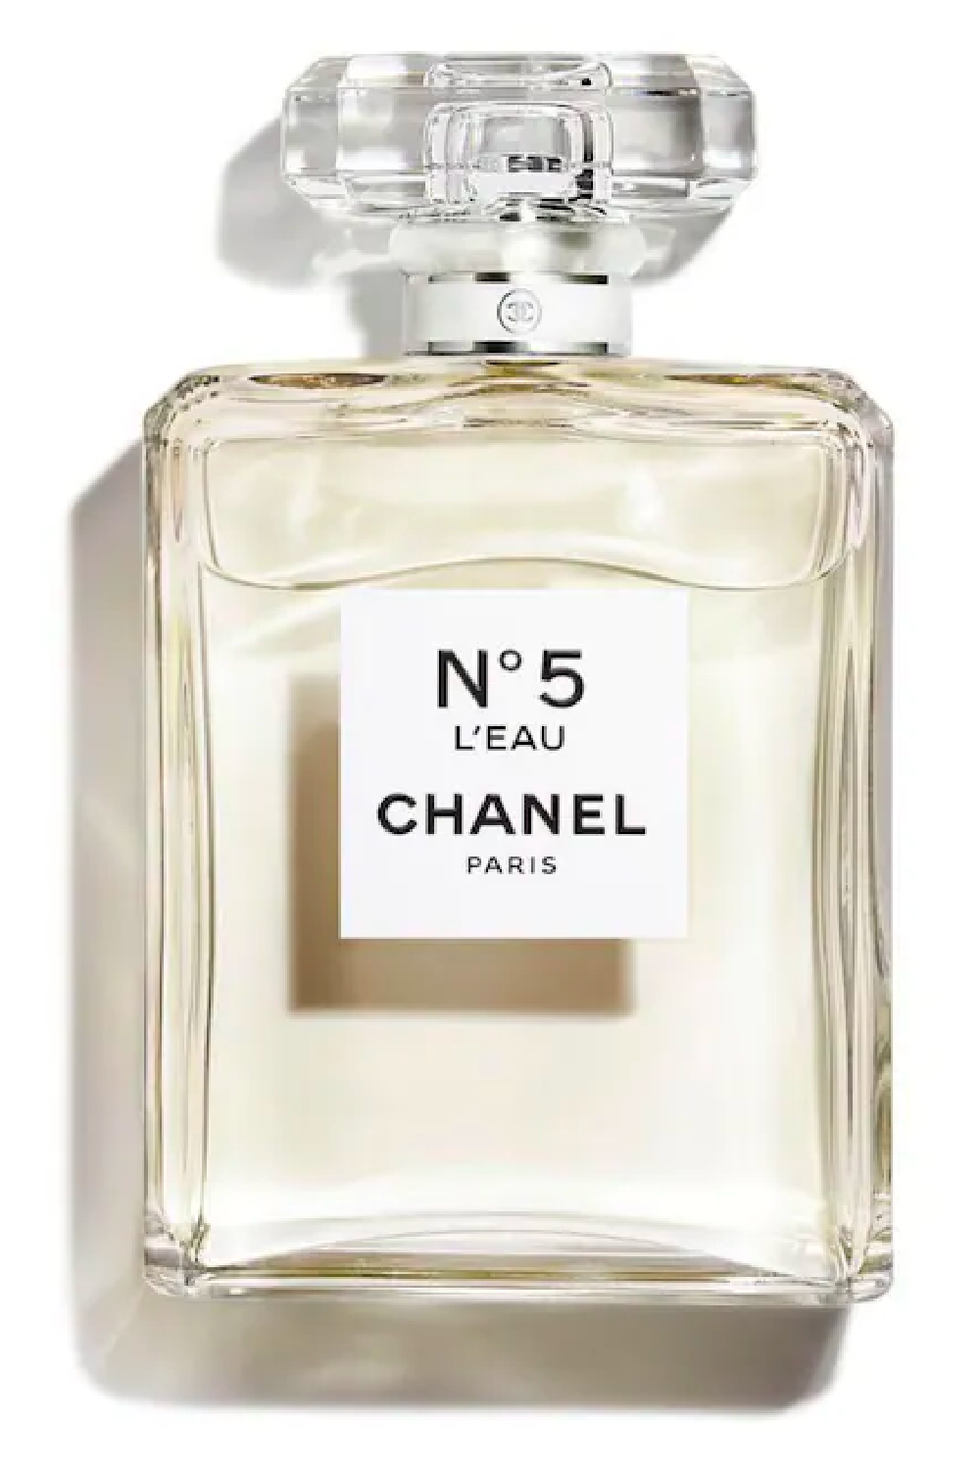 8 Chanel Perfumes That Last The Longest